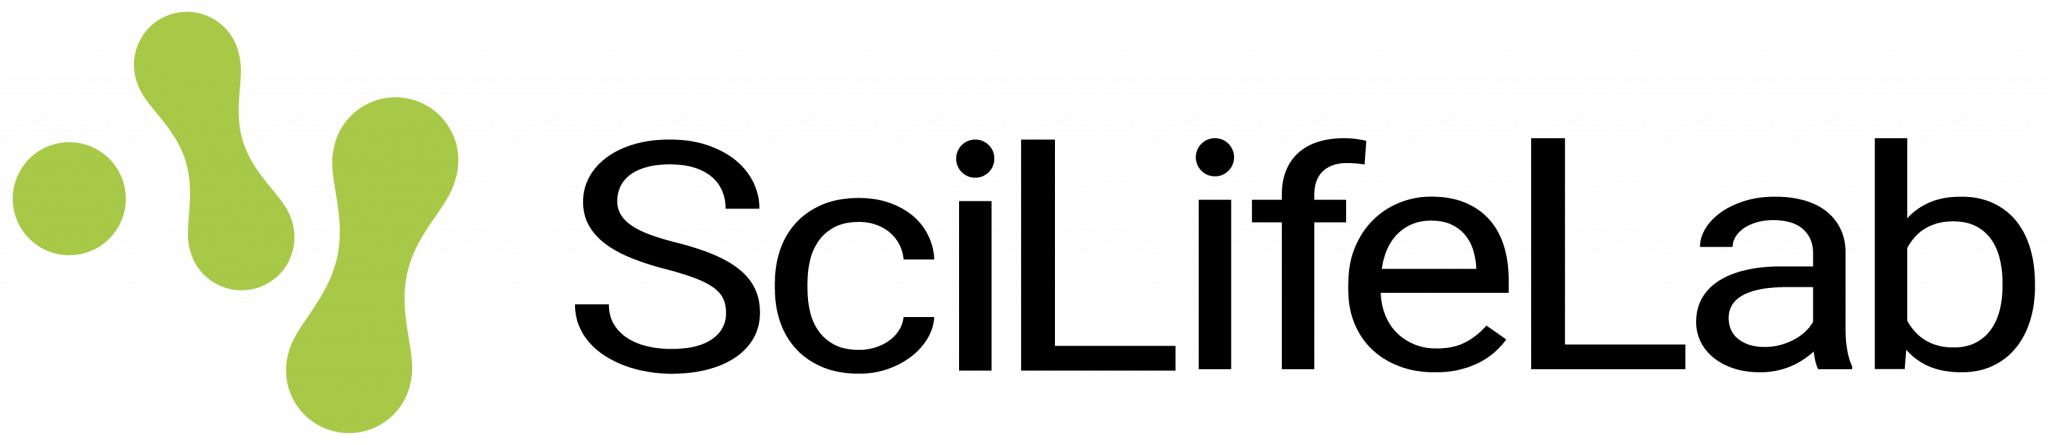 SciLifeLab Logotype